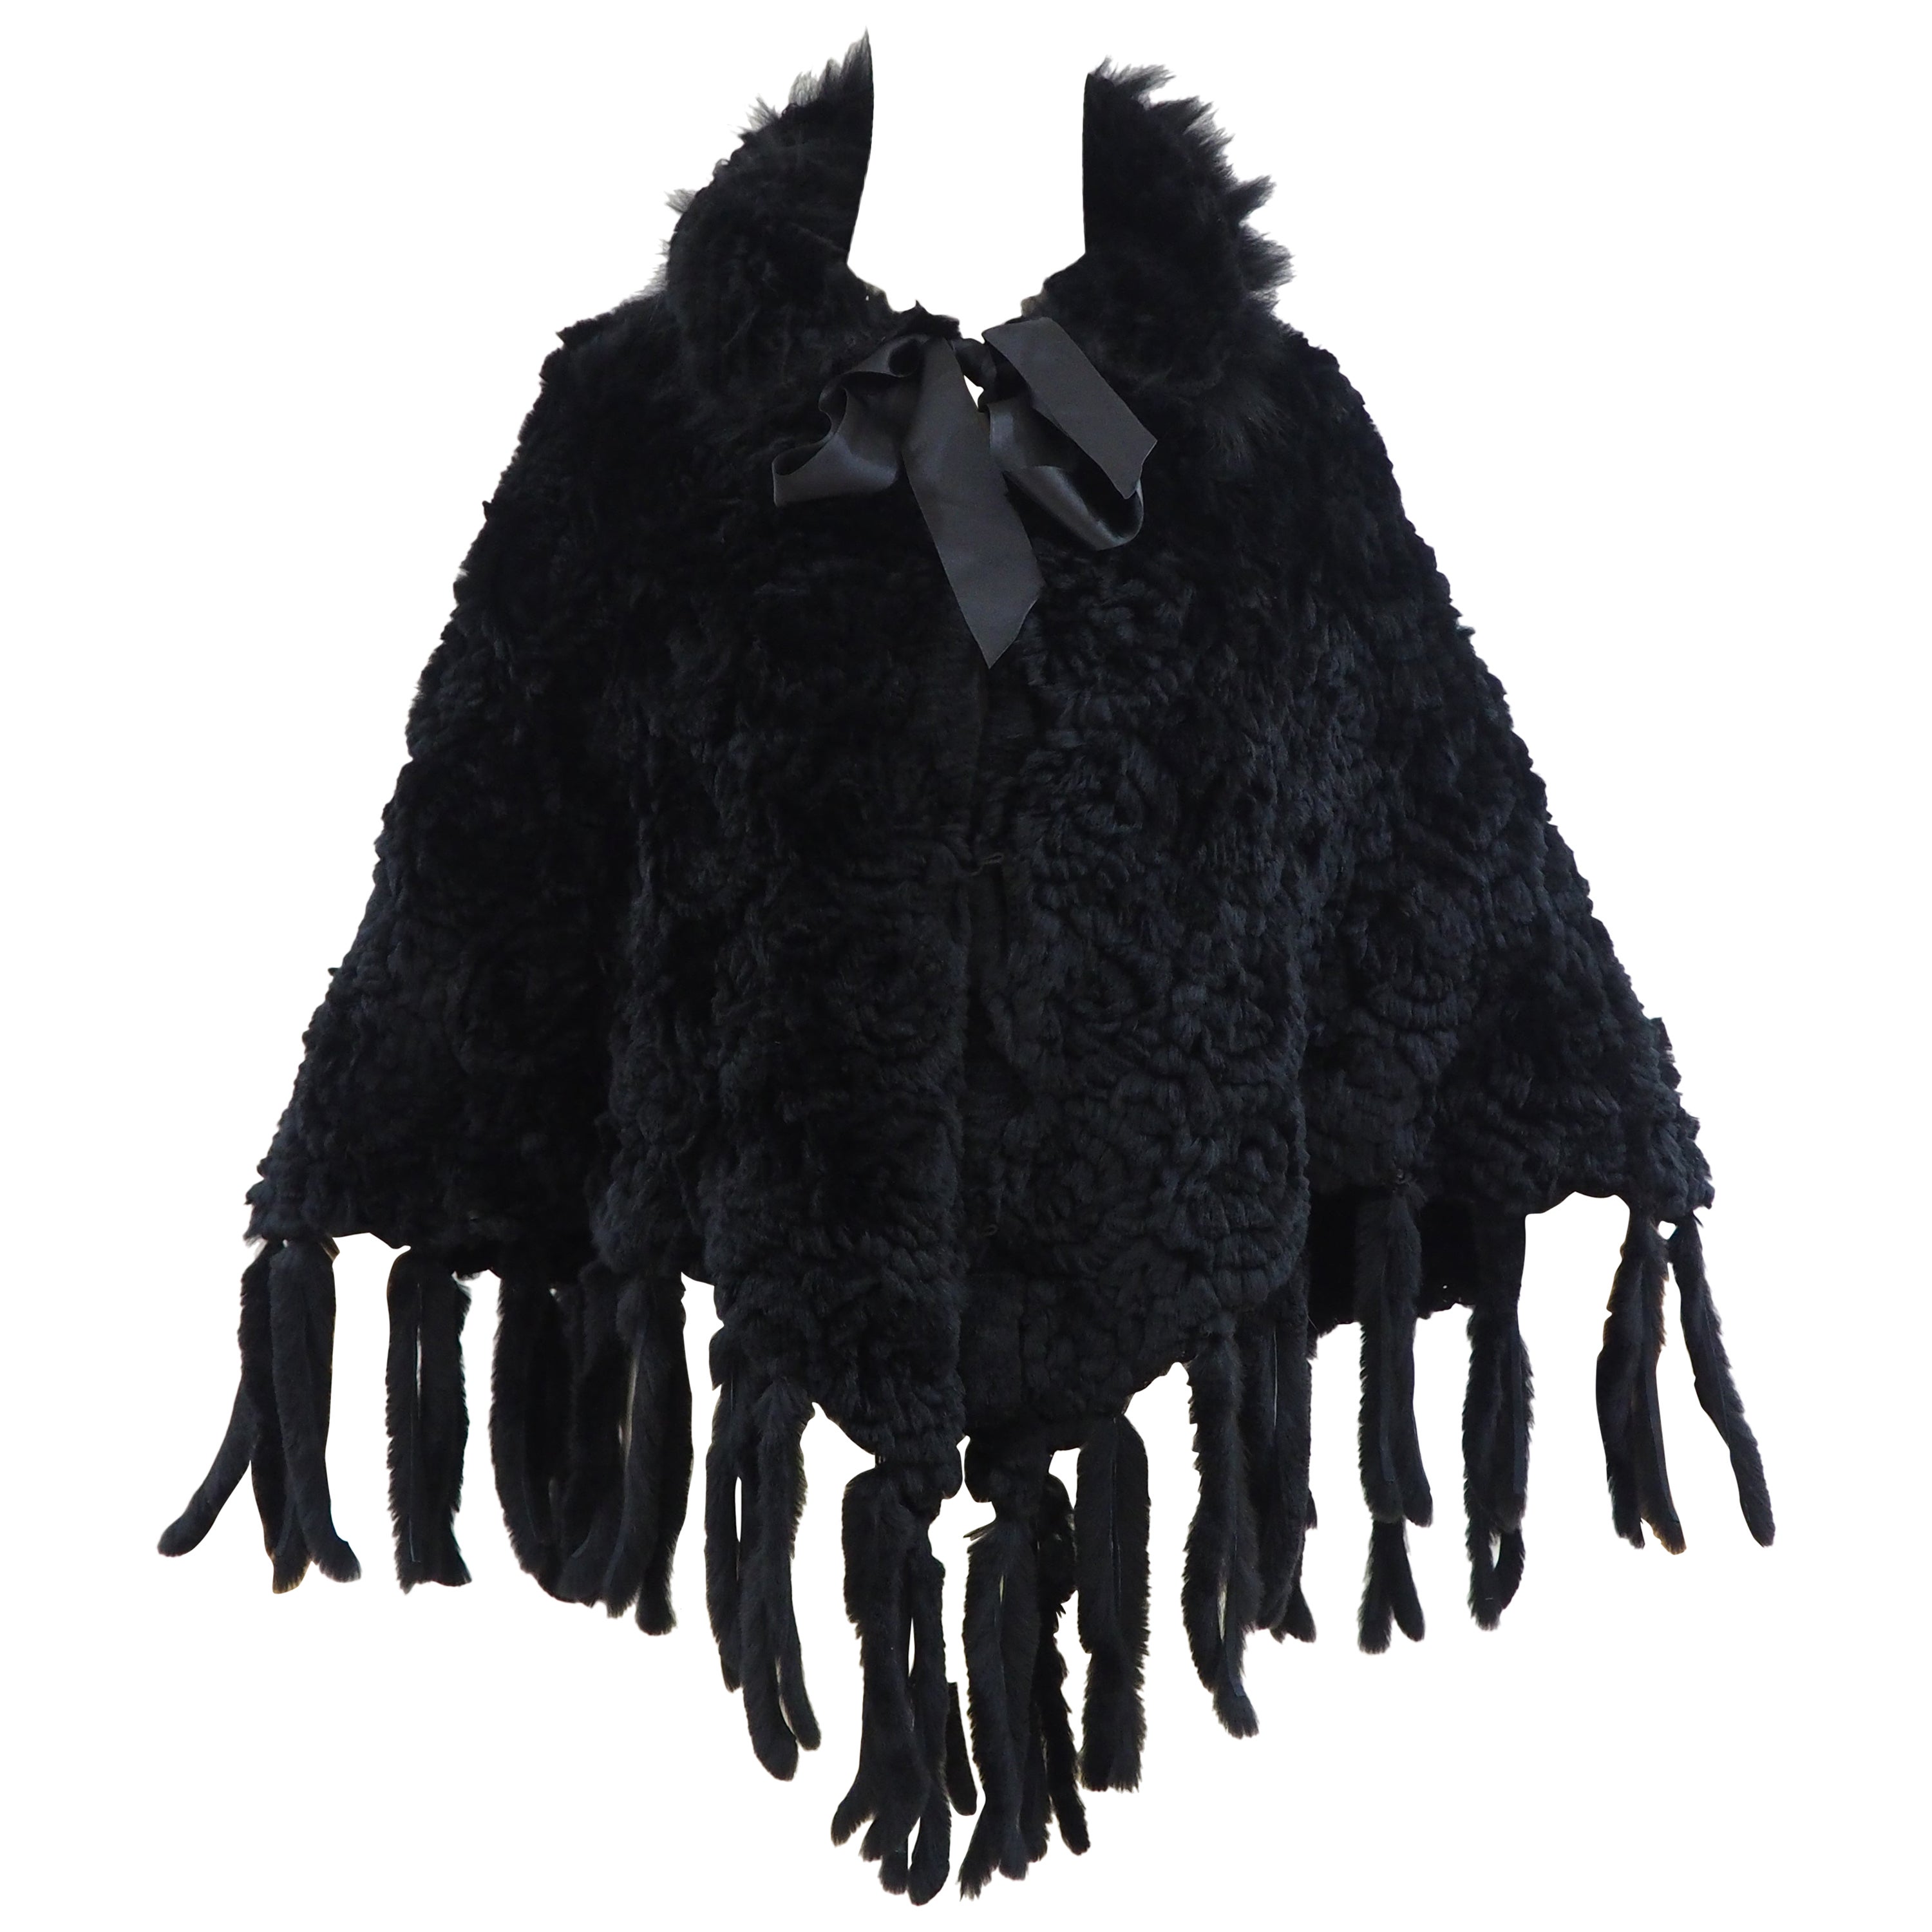 Black lapin fur fringes jacket cape For Sale